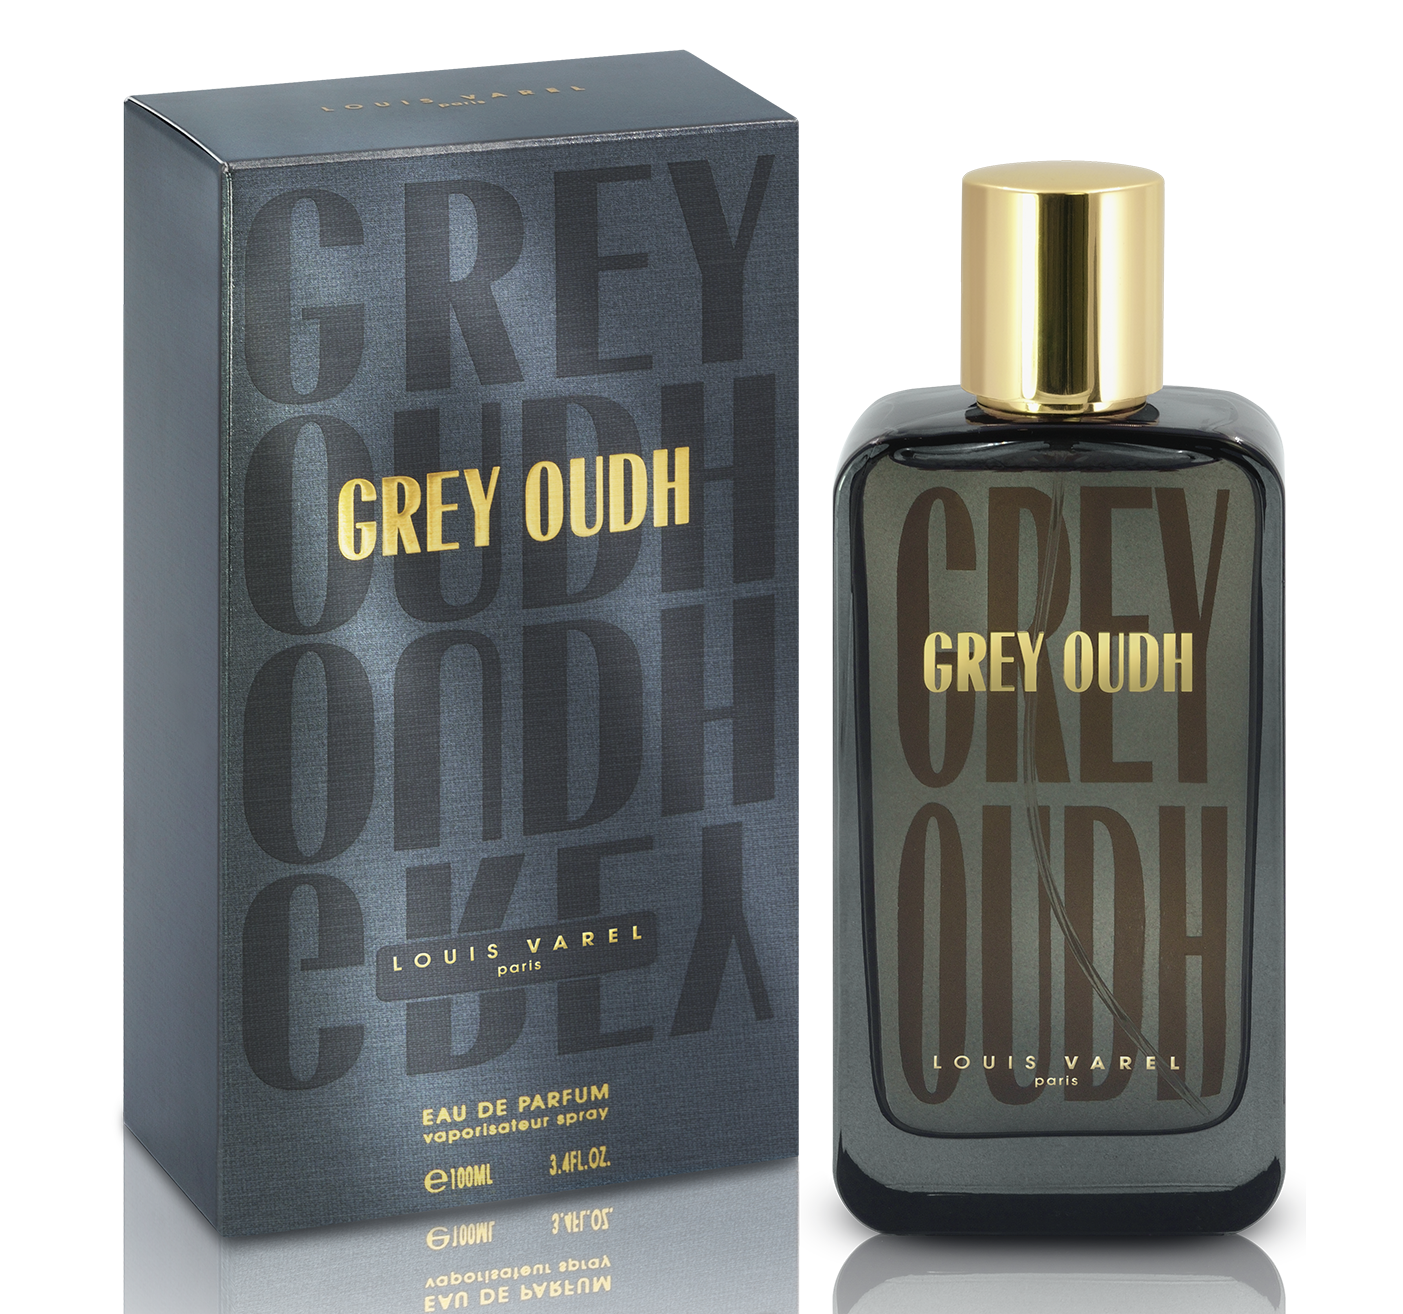 Louis Varel Oudh EDP Unisex 100ml Perfume | Fragrance | Halabh.com